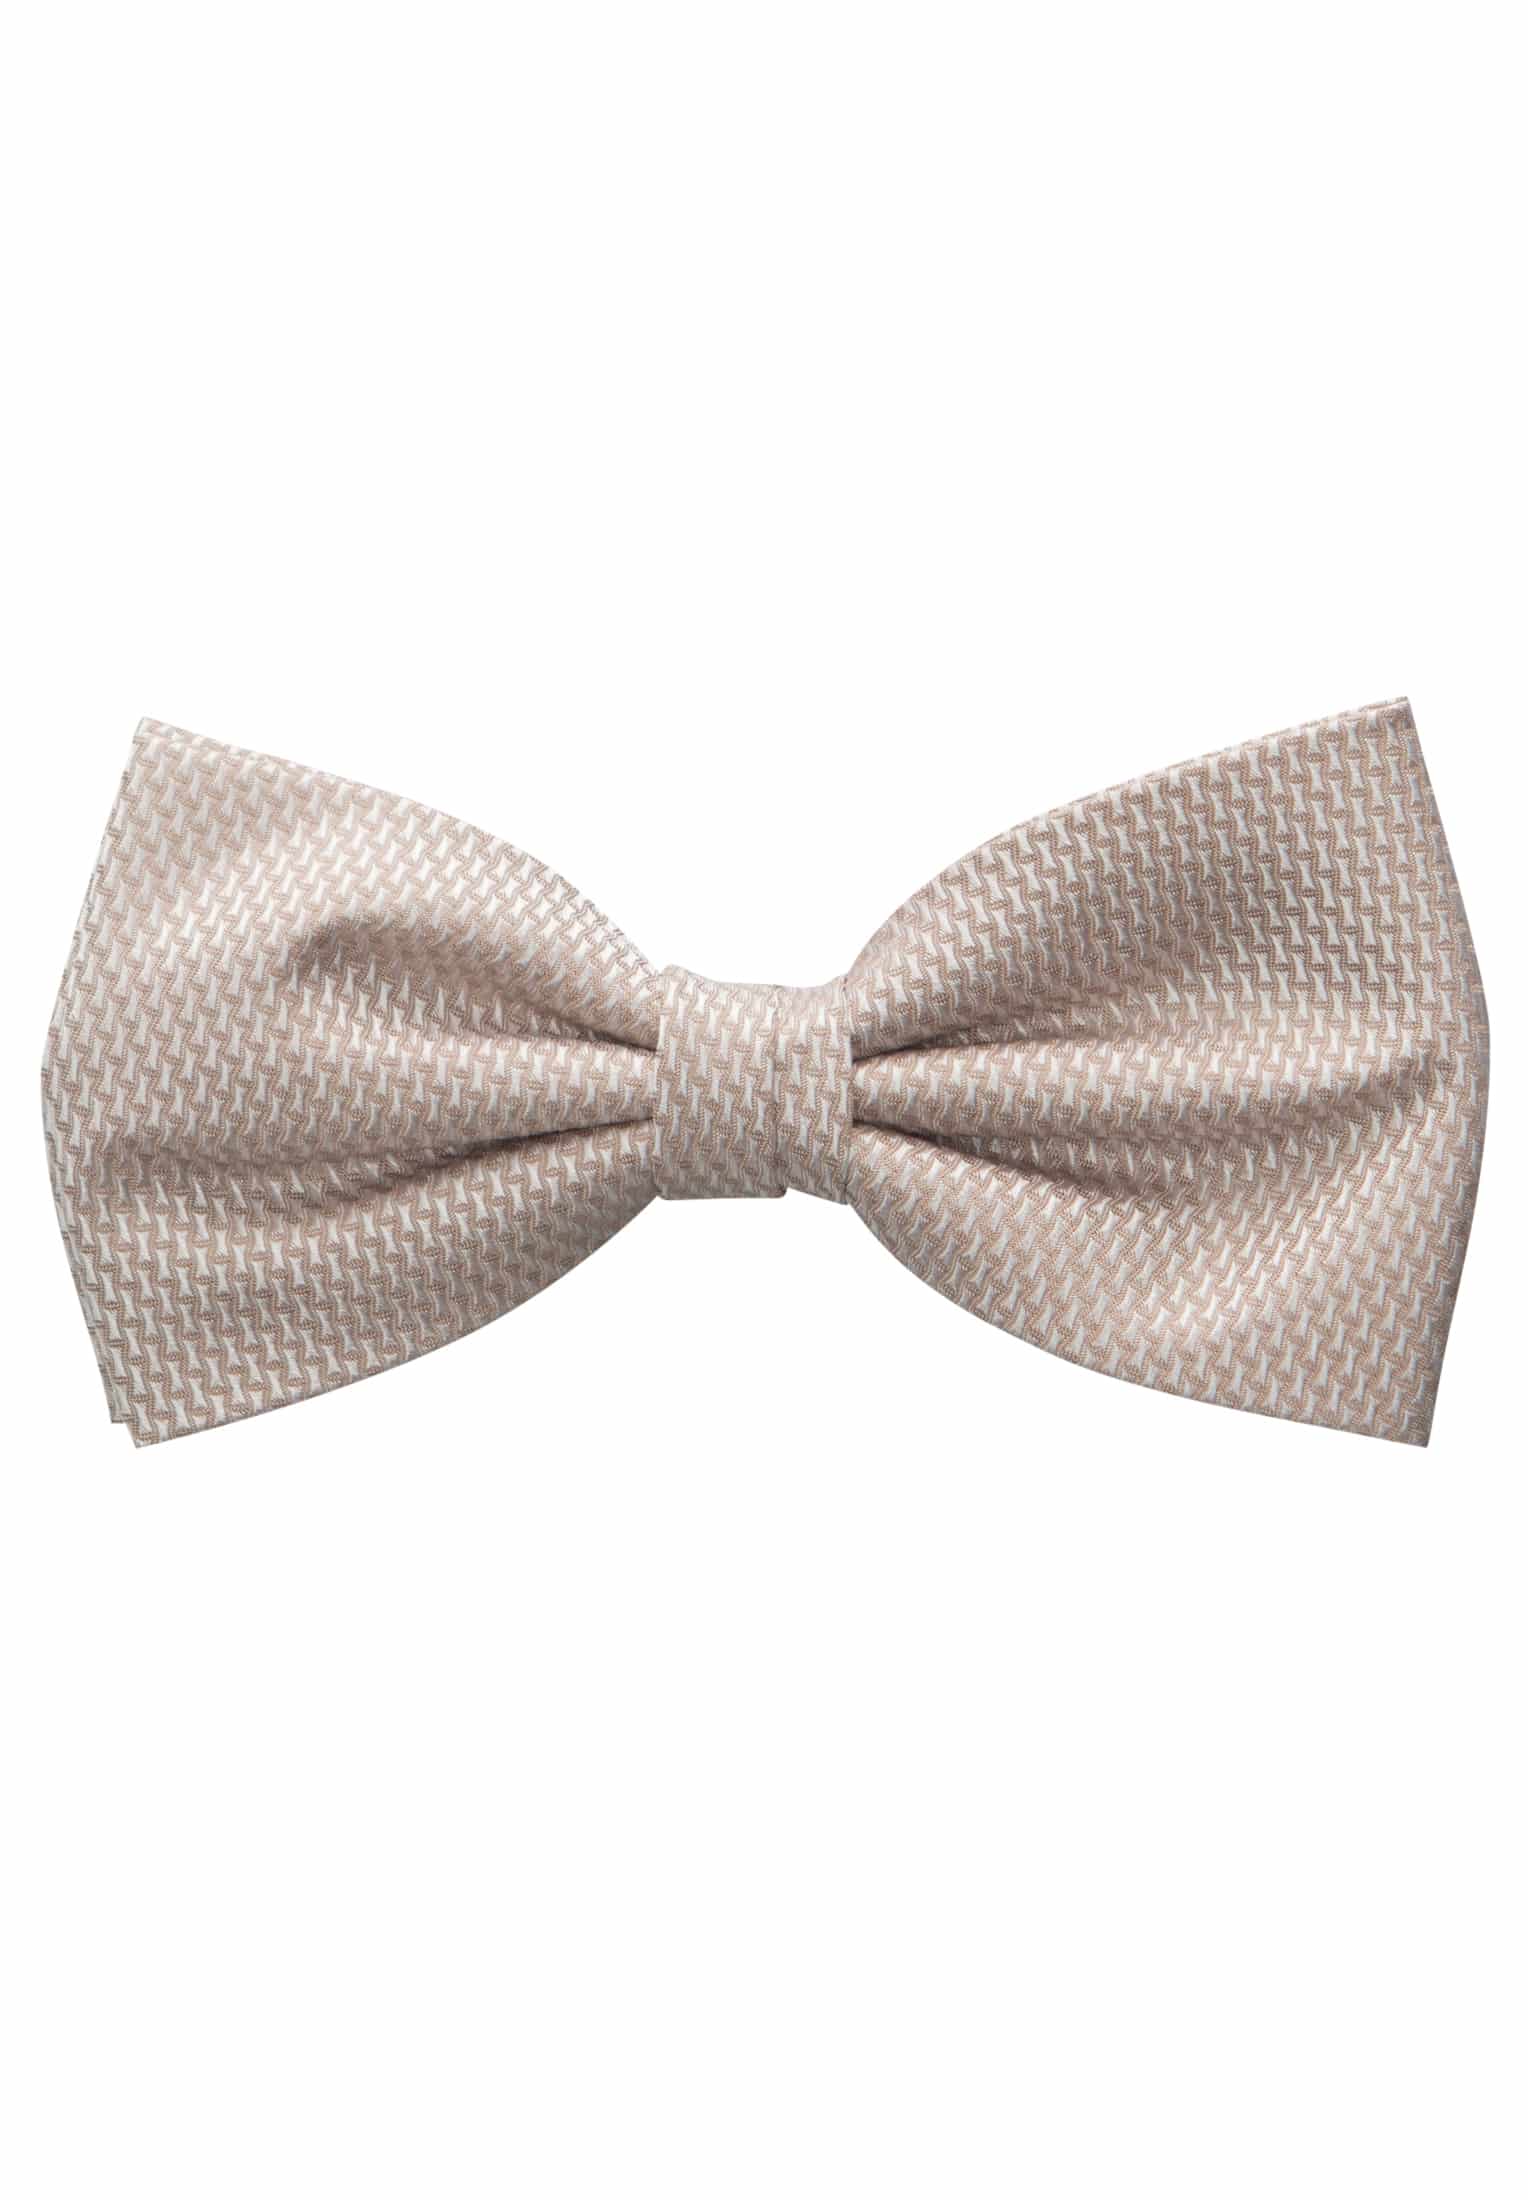 ETERNA textured bow tie